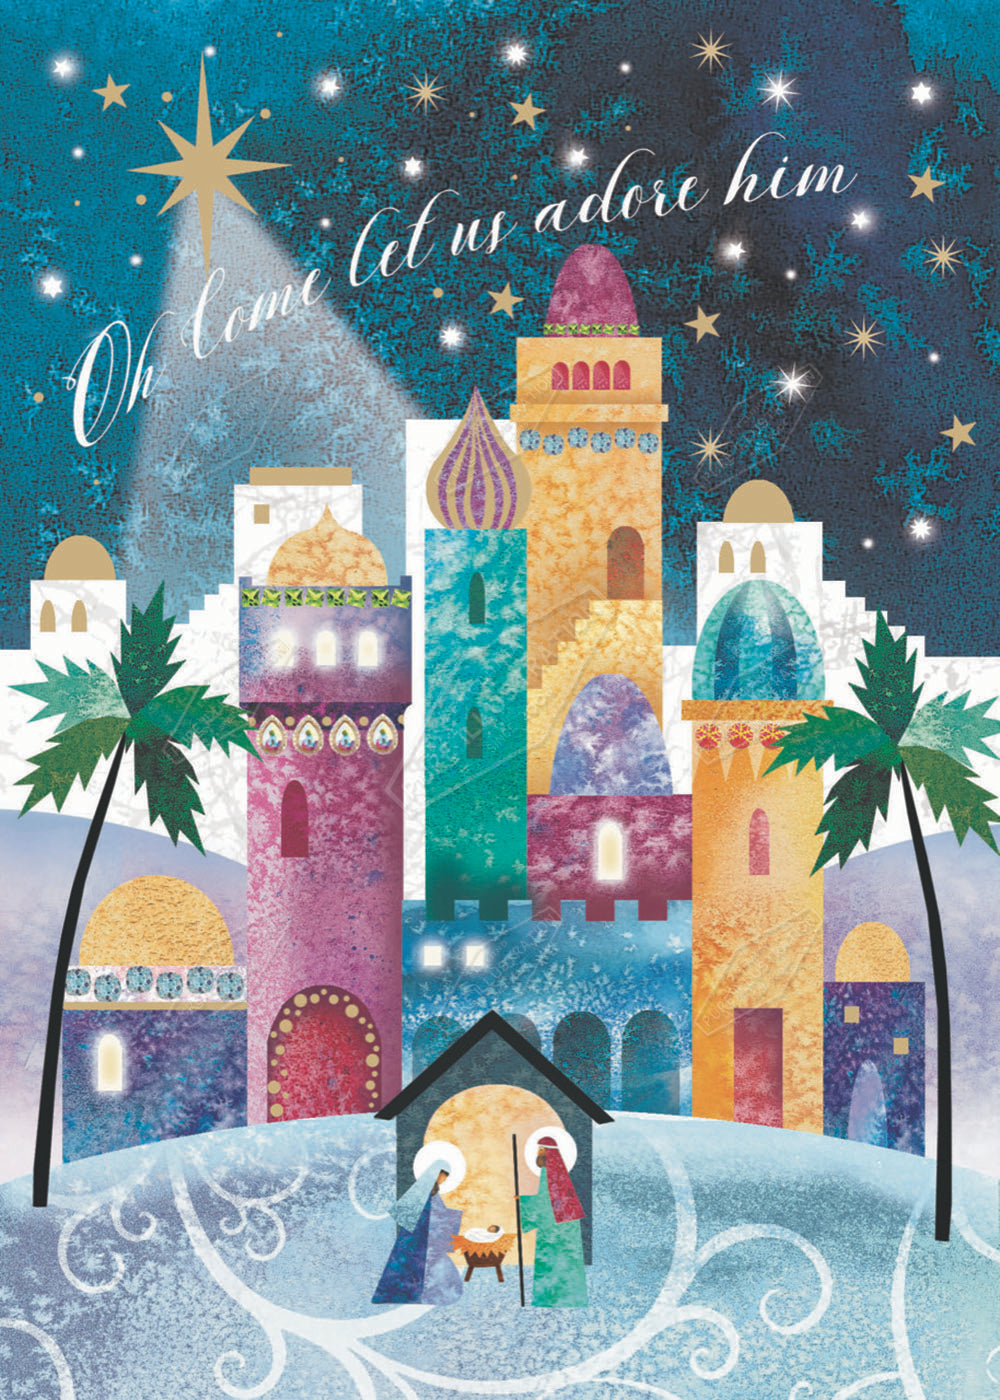 00033610DEV - Deva Evans is represented by Pure Art Licensing Agency - Christmas Greeting Card Design